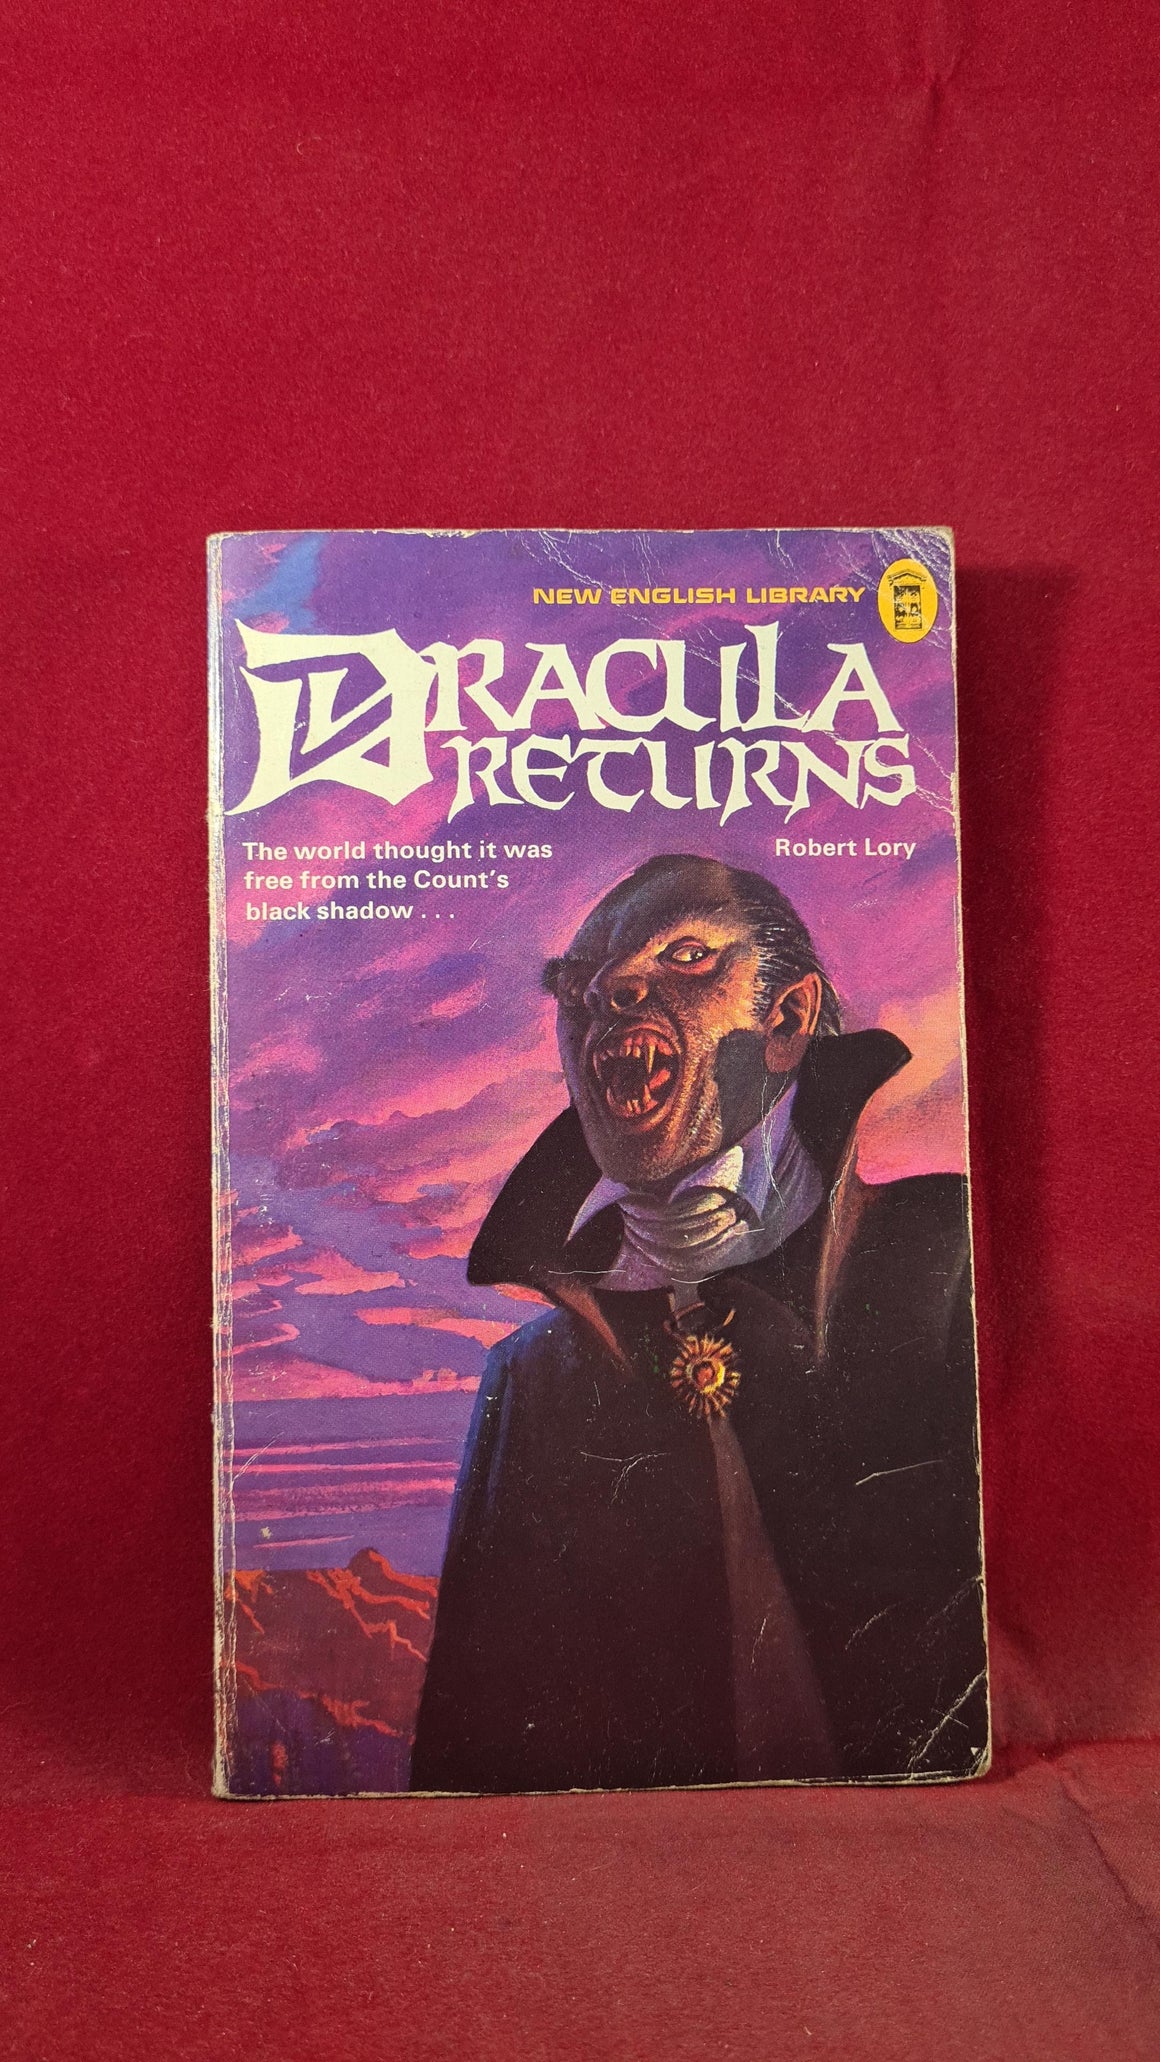 Dracula Returns by Robert Lory